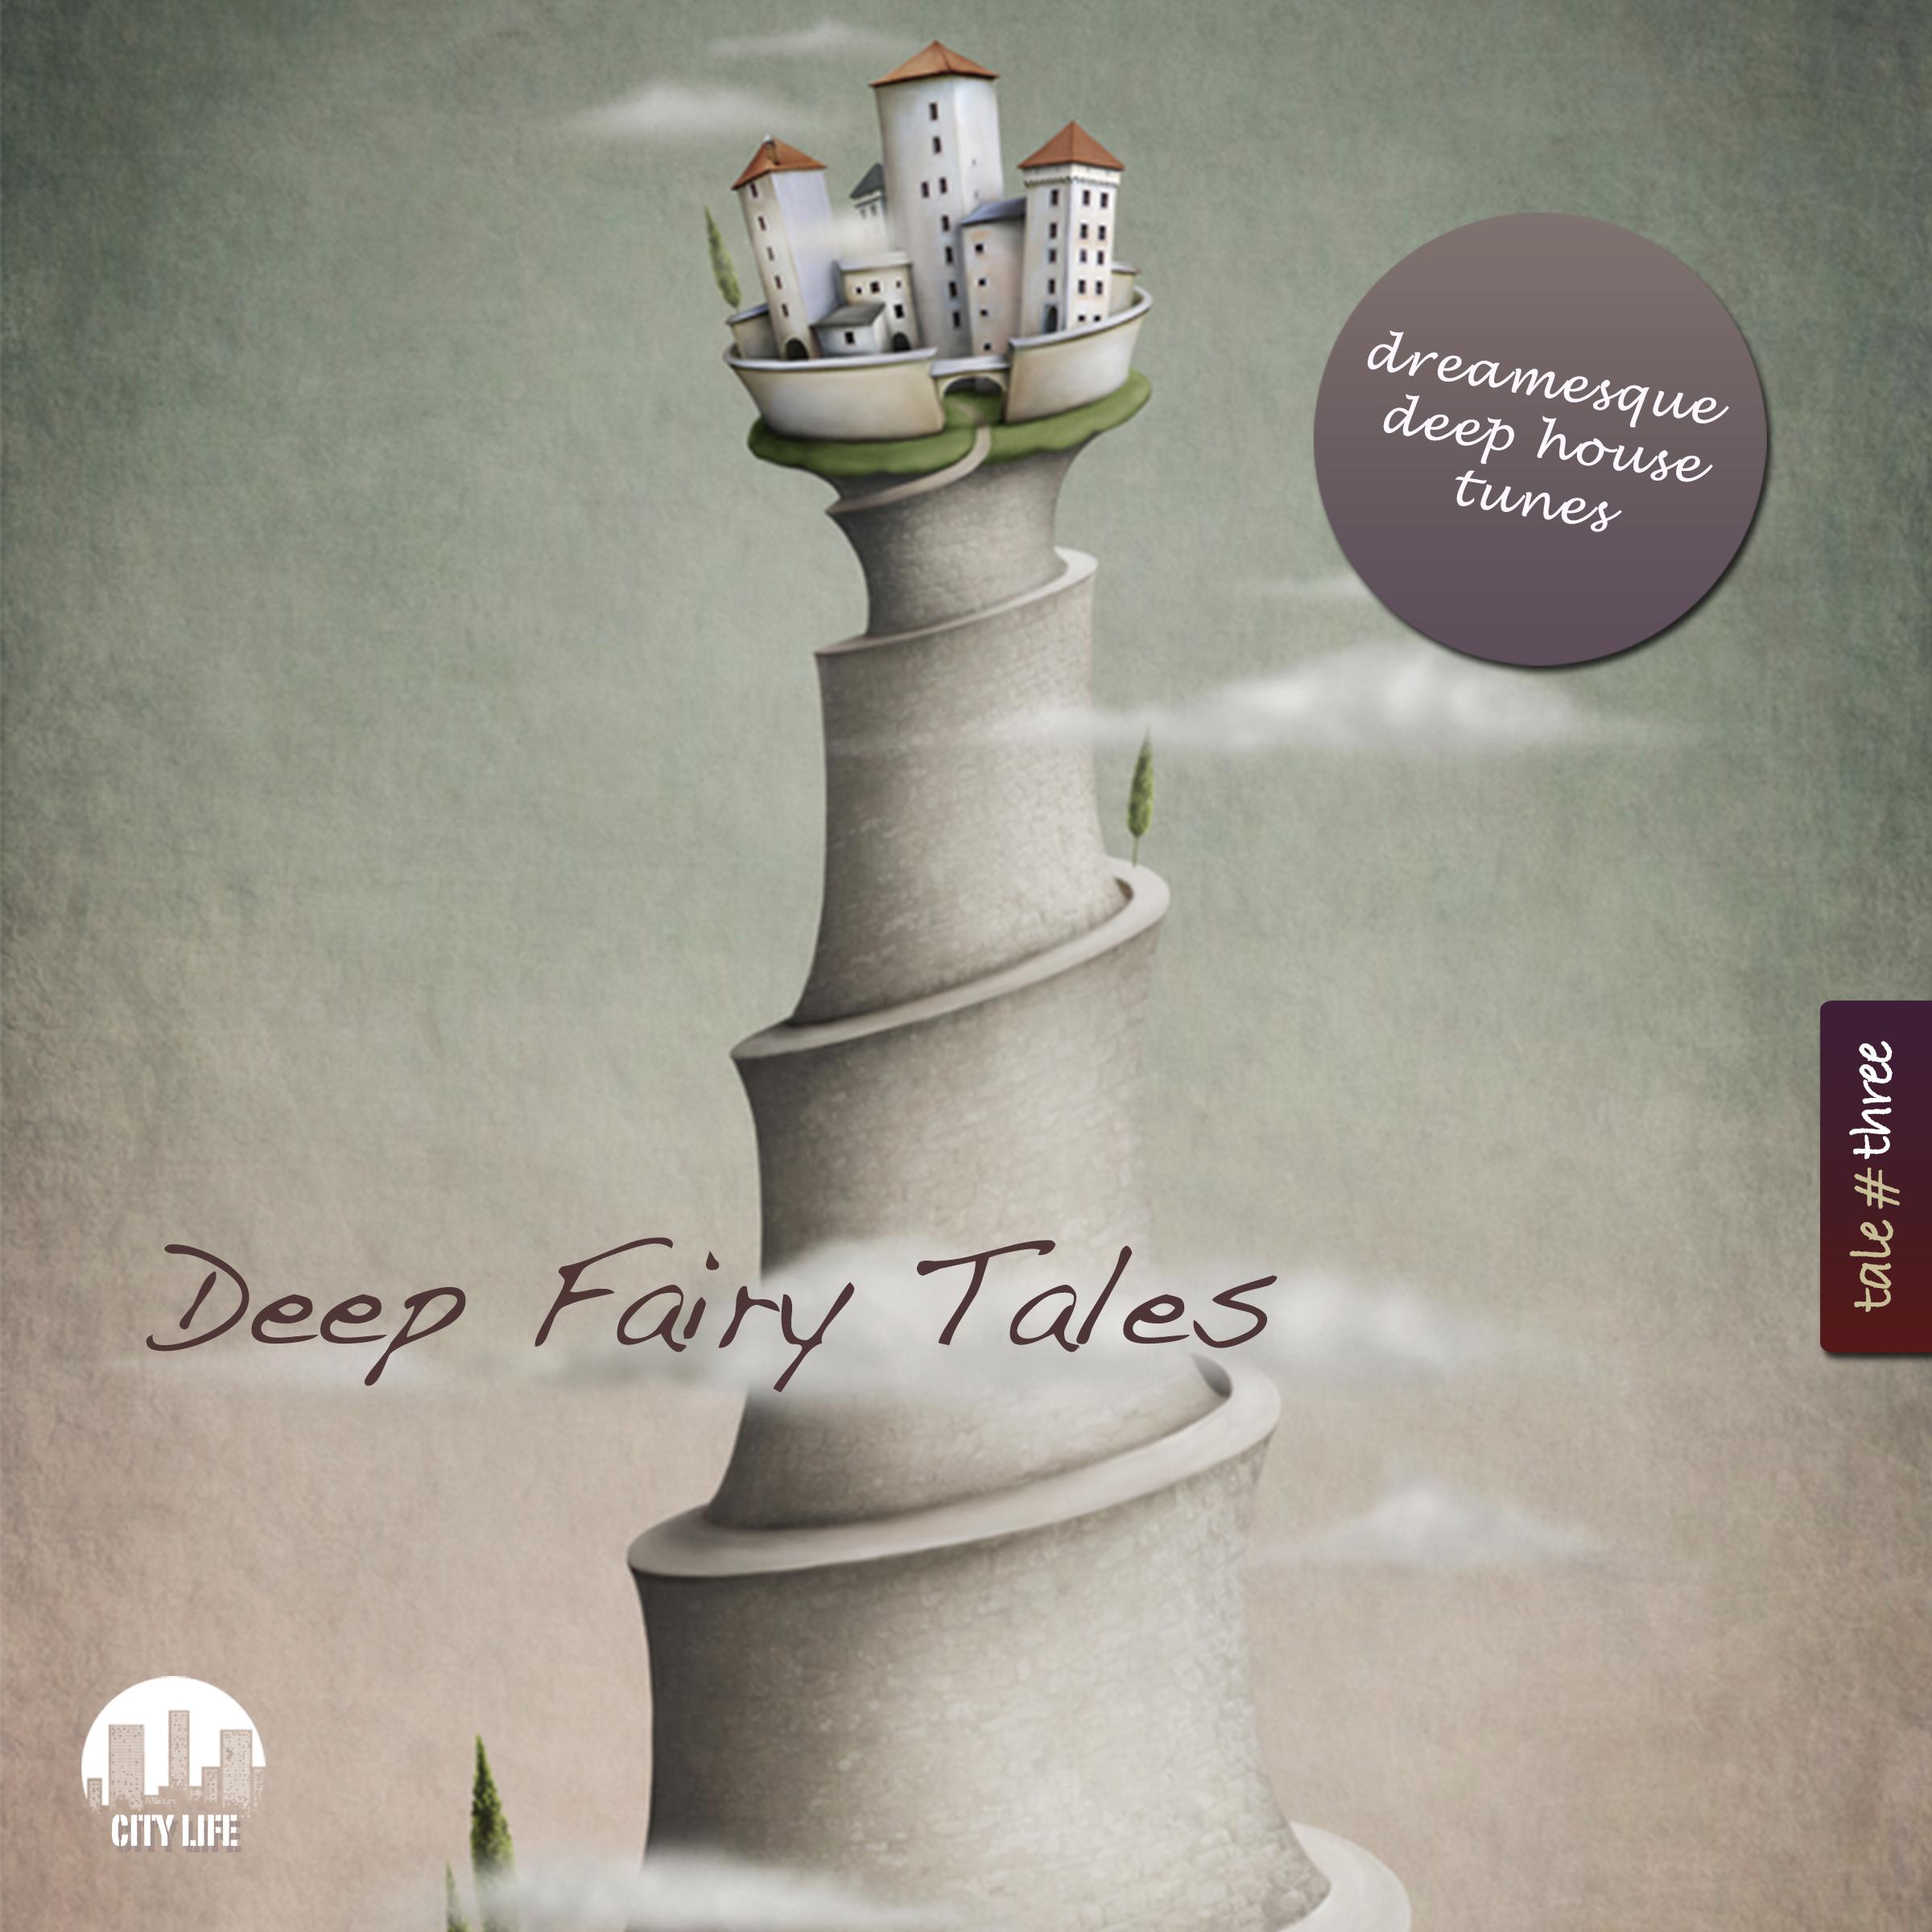 Deep Fairy Tales, Vol. 3 - Dreamesque Deep House Tunes